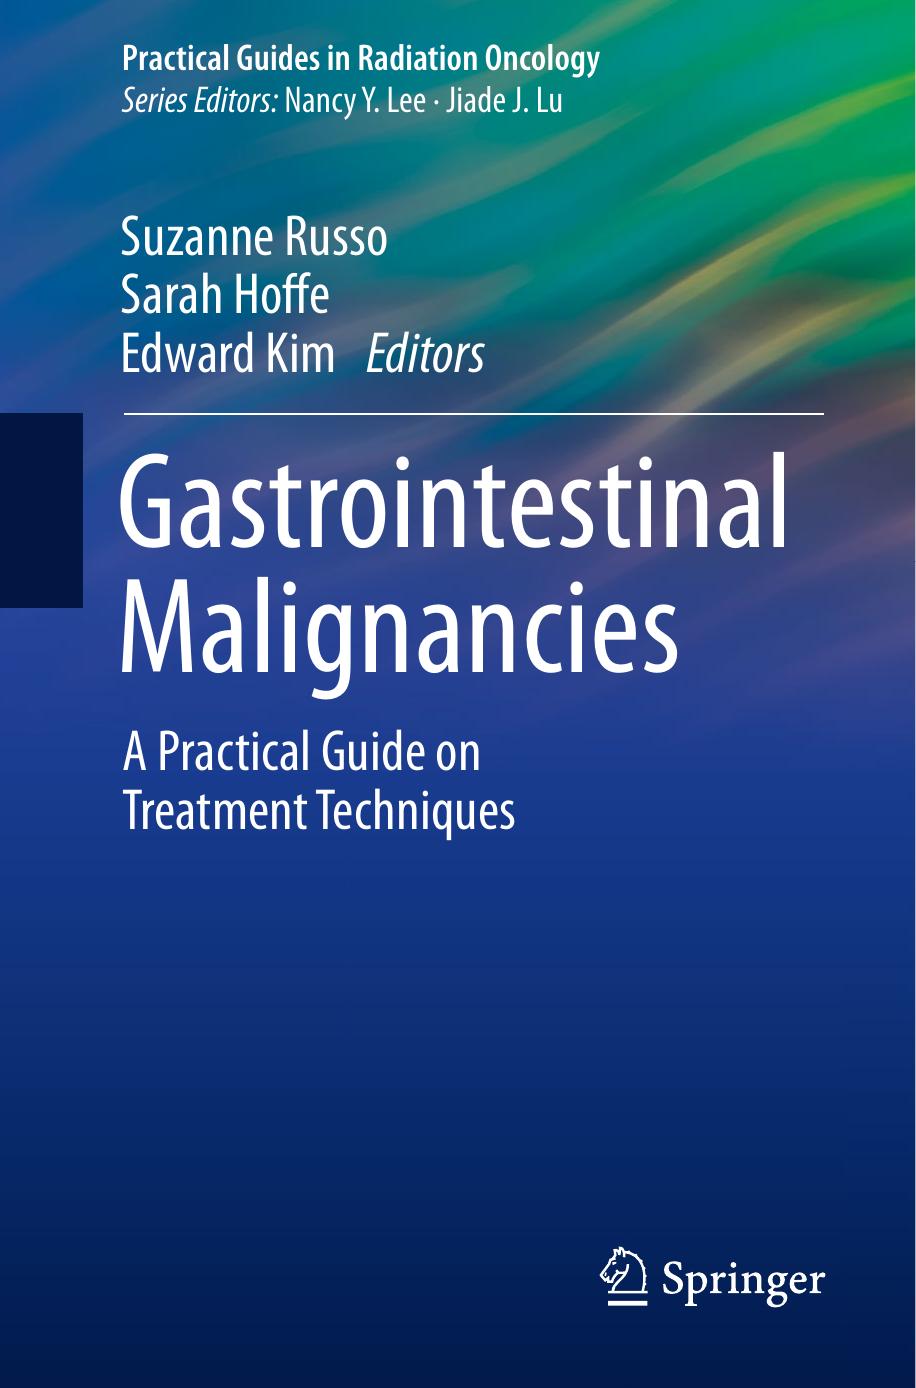 Gastrointestinal Malignancies A Practical Guide on Treatment Techniques 2018